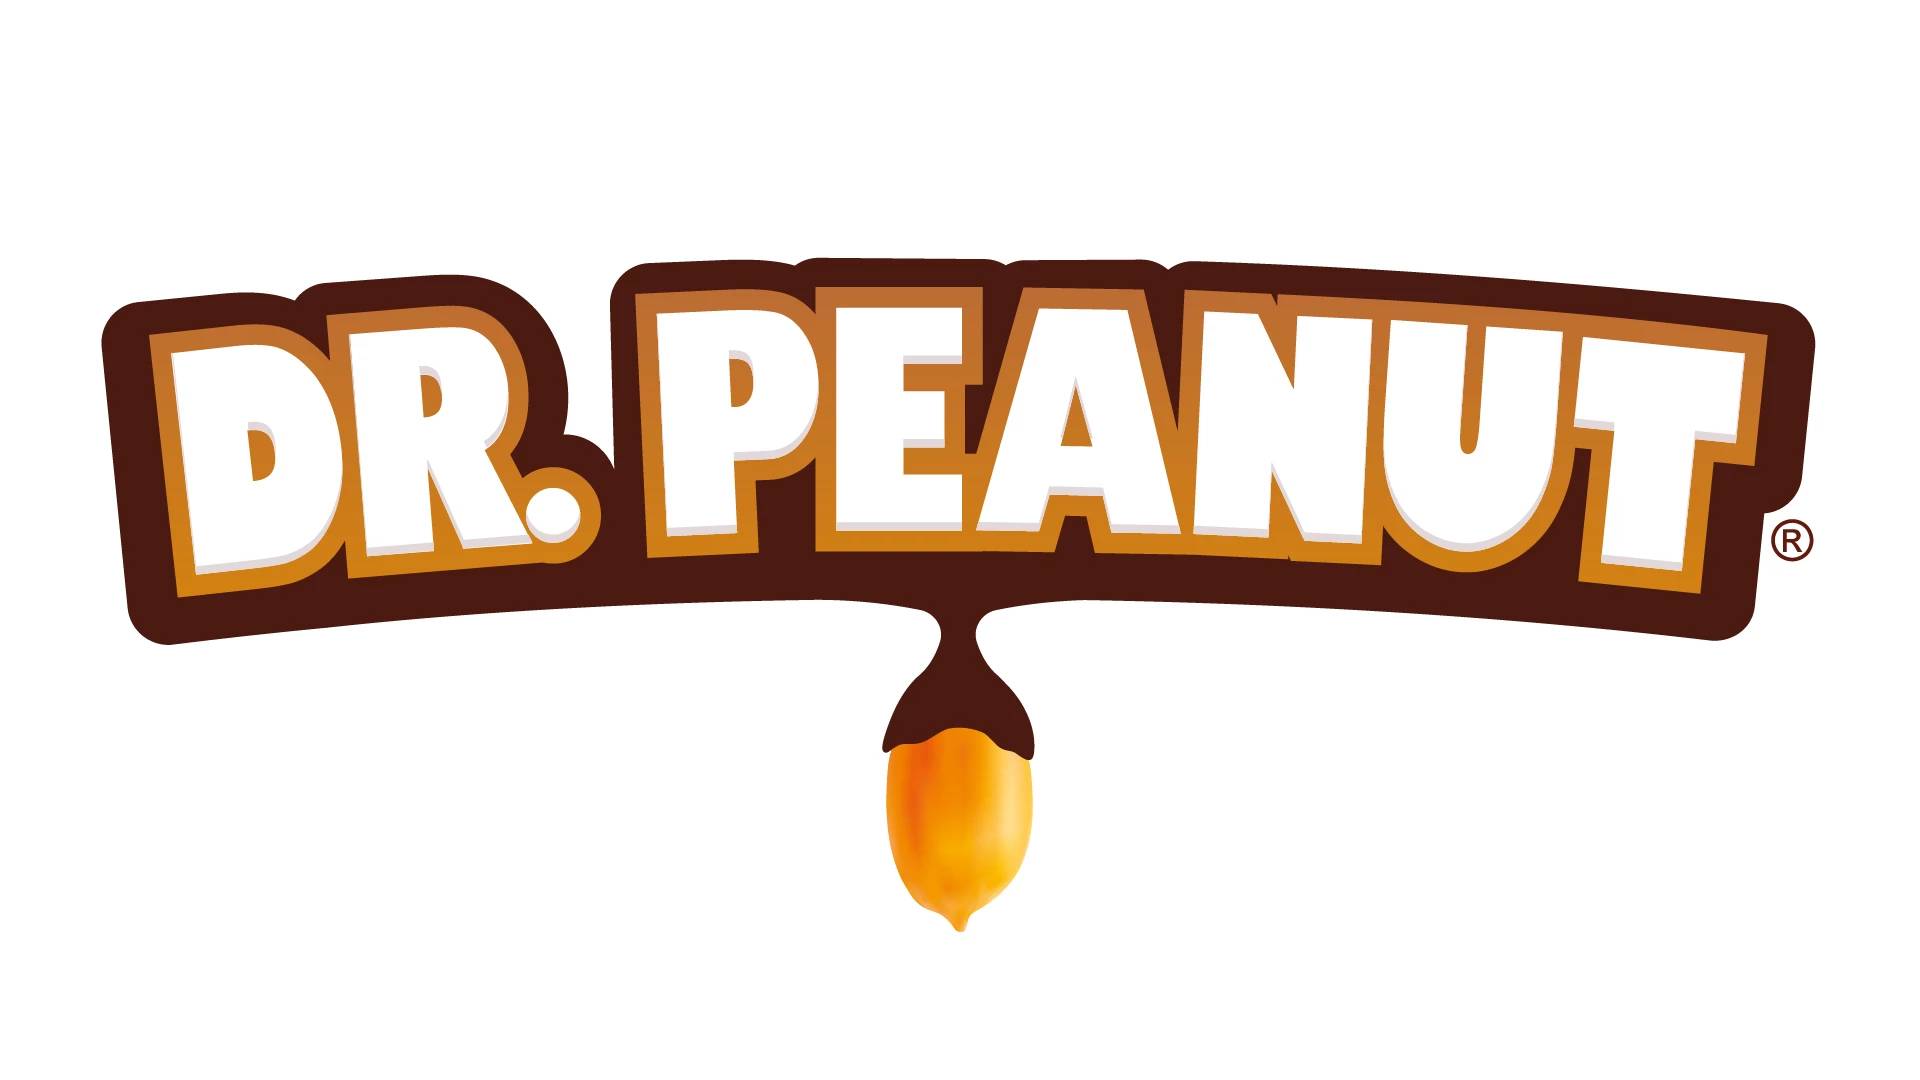 Dr. Peanut